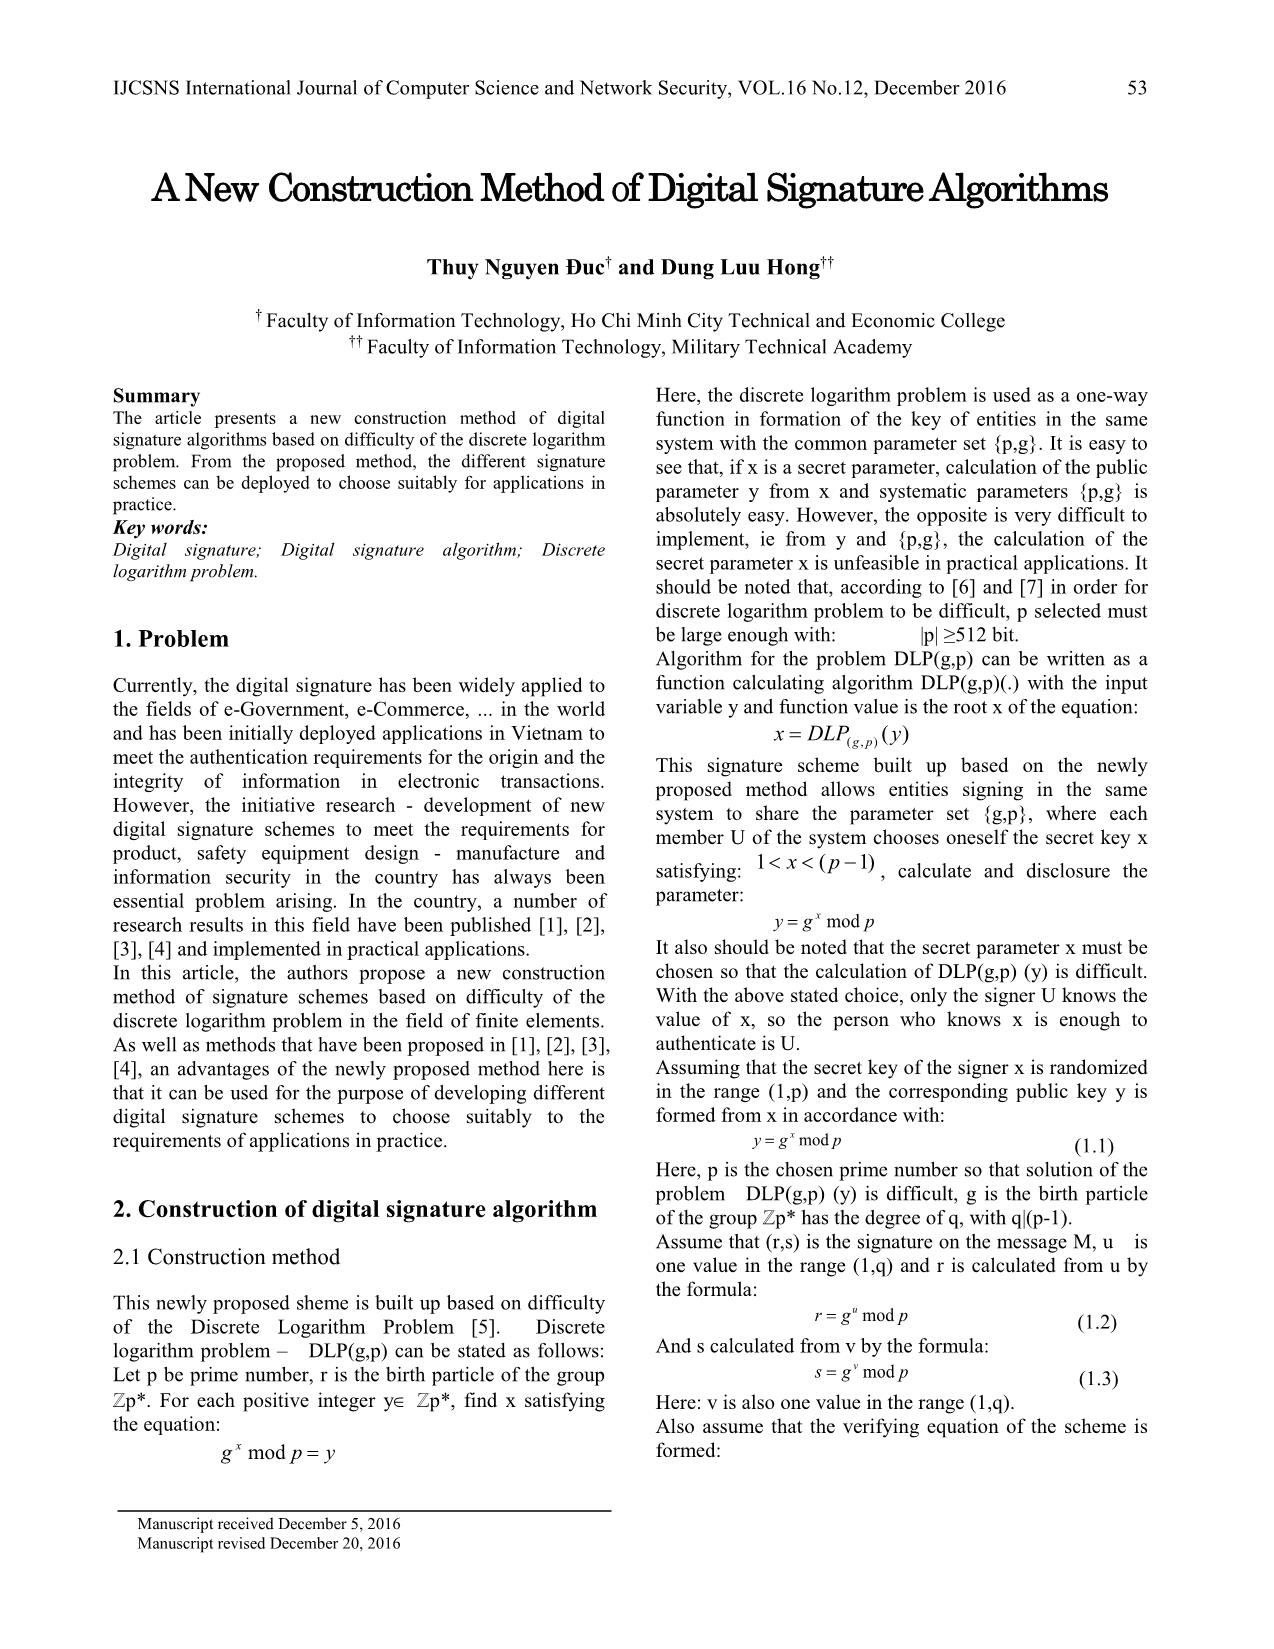 Anew construction method of digital signature algorithms trang 1